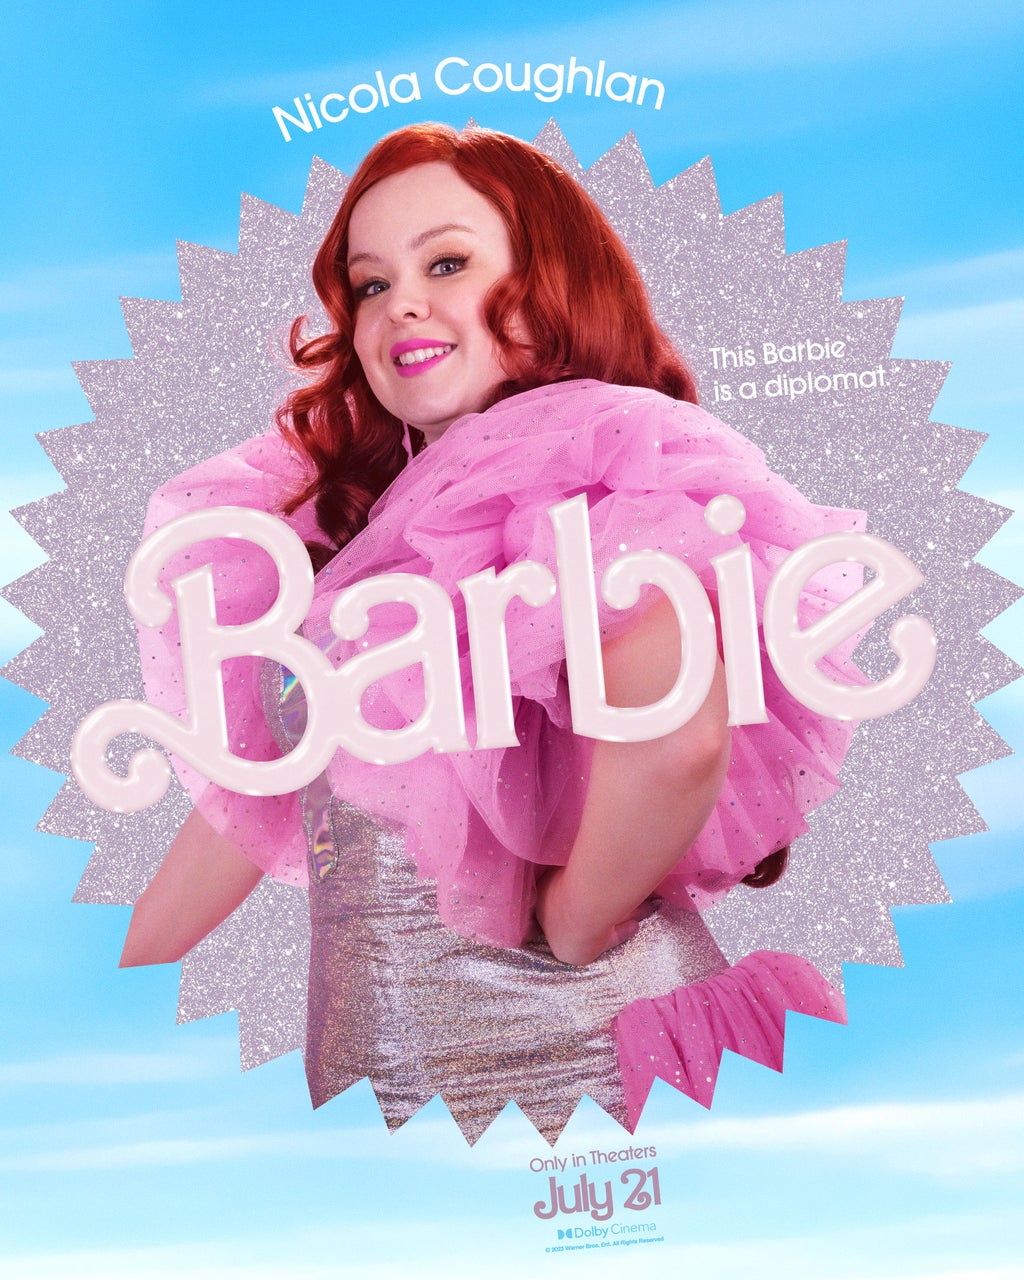 nicola coughlan in barbie movie